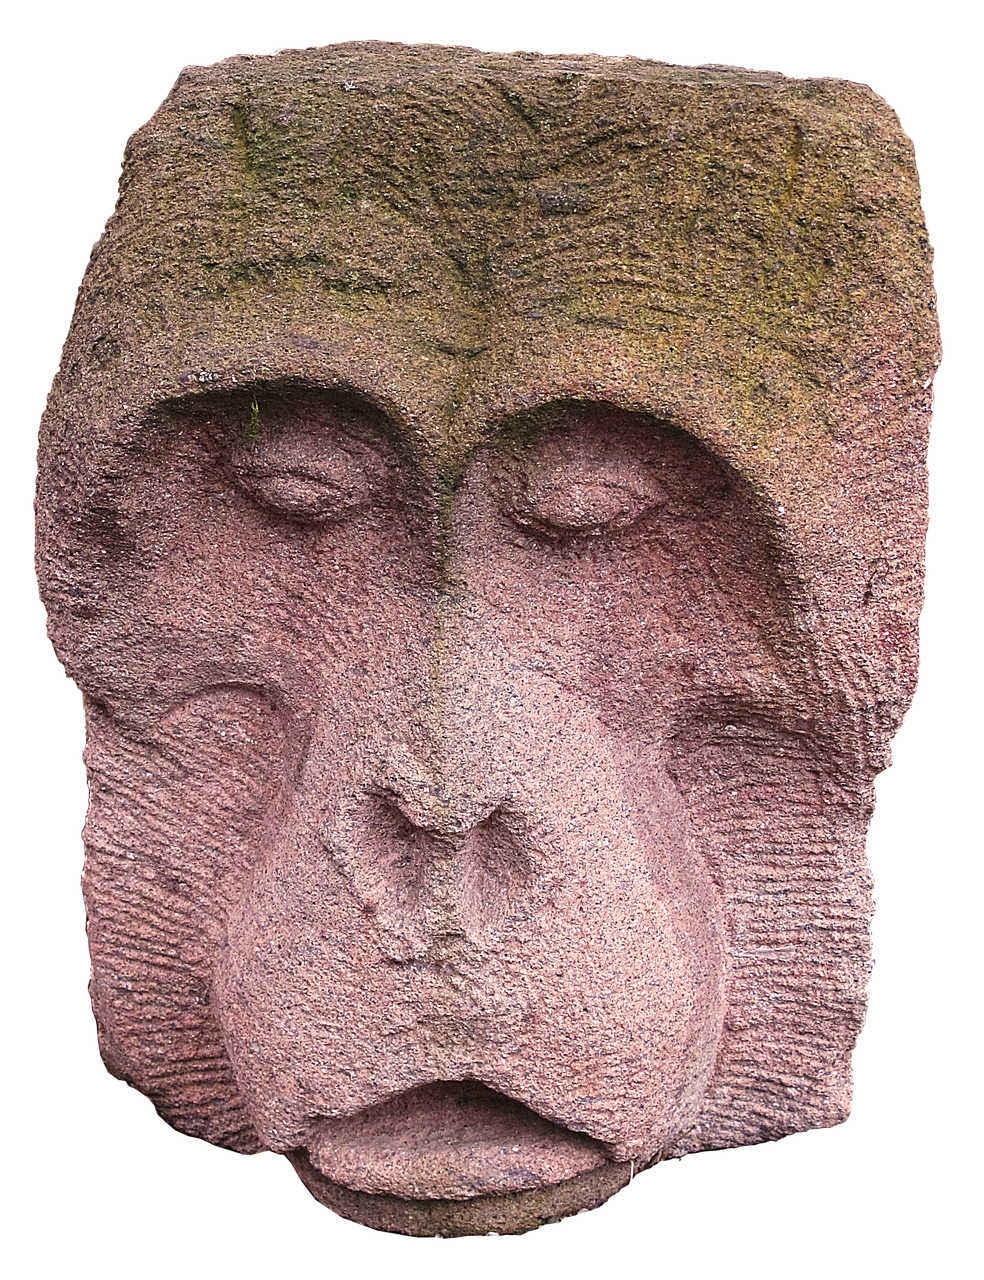 monkey stone figure sculpture free photo